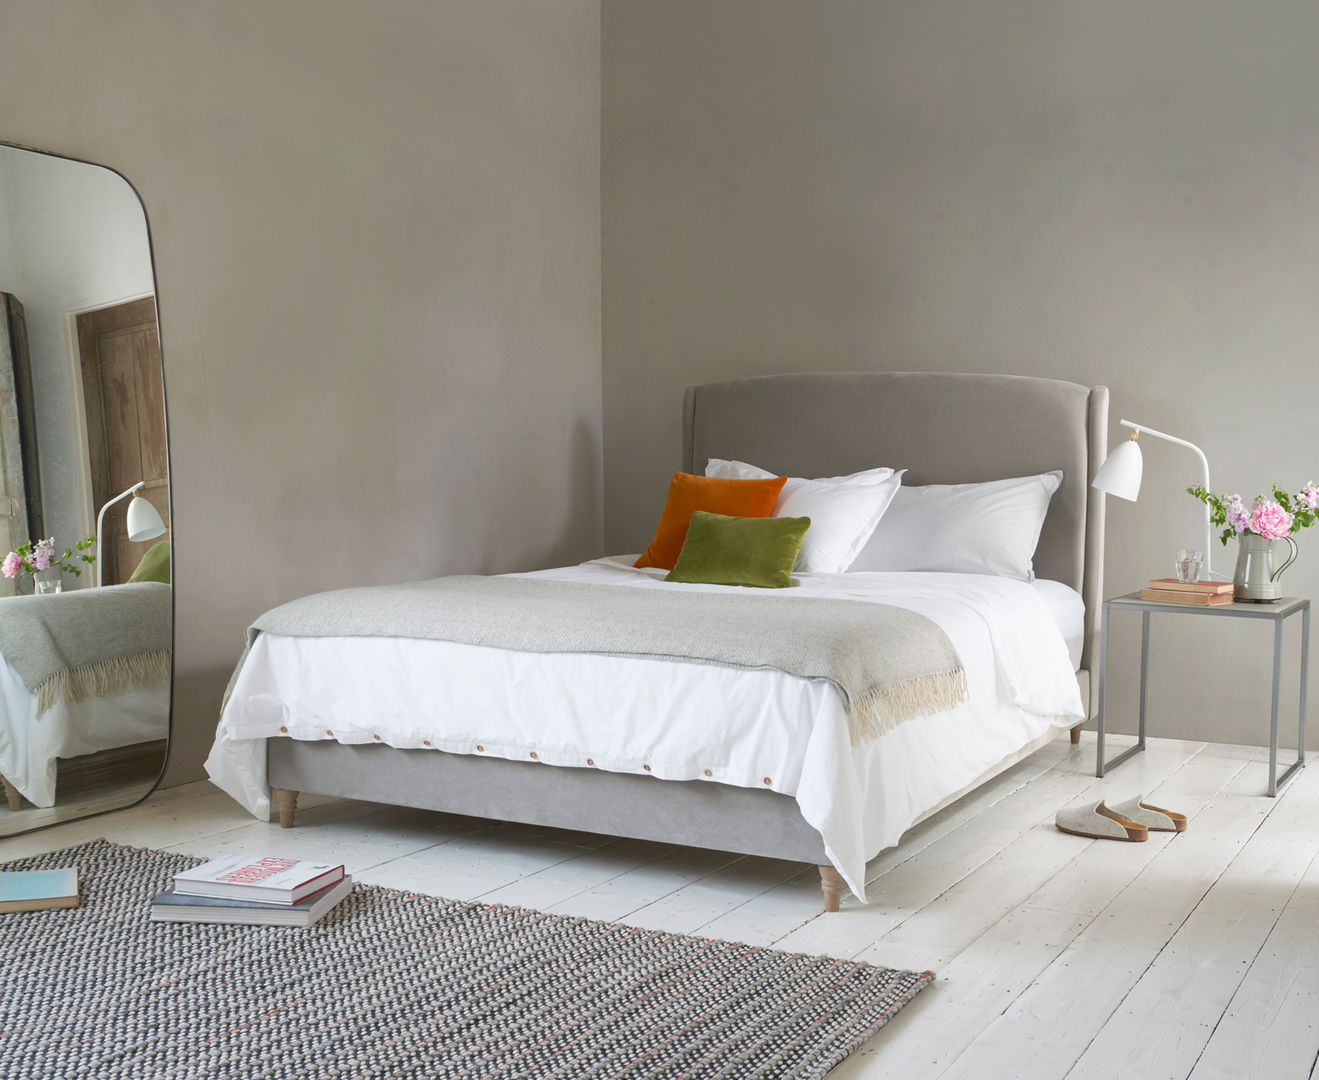 Dazzler bed Loaf Modern style bedroom Textile Amber/Gold Beds & headboards